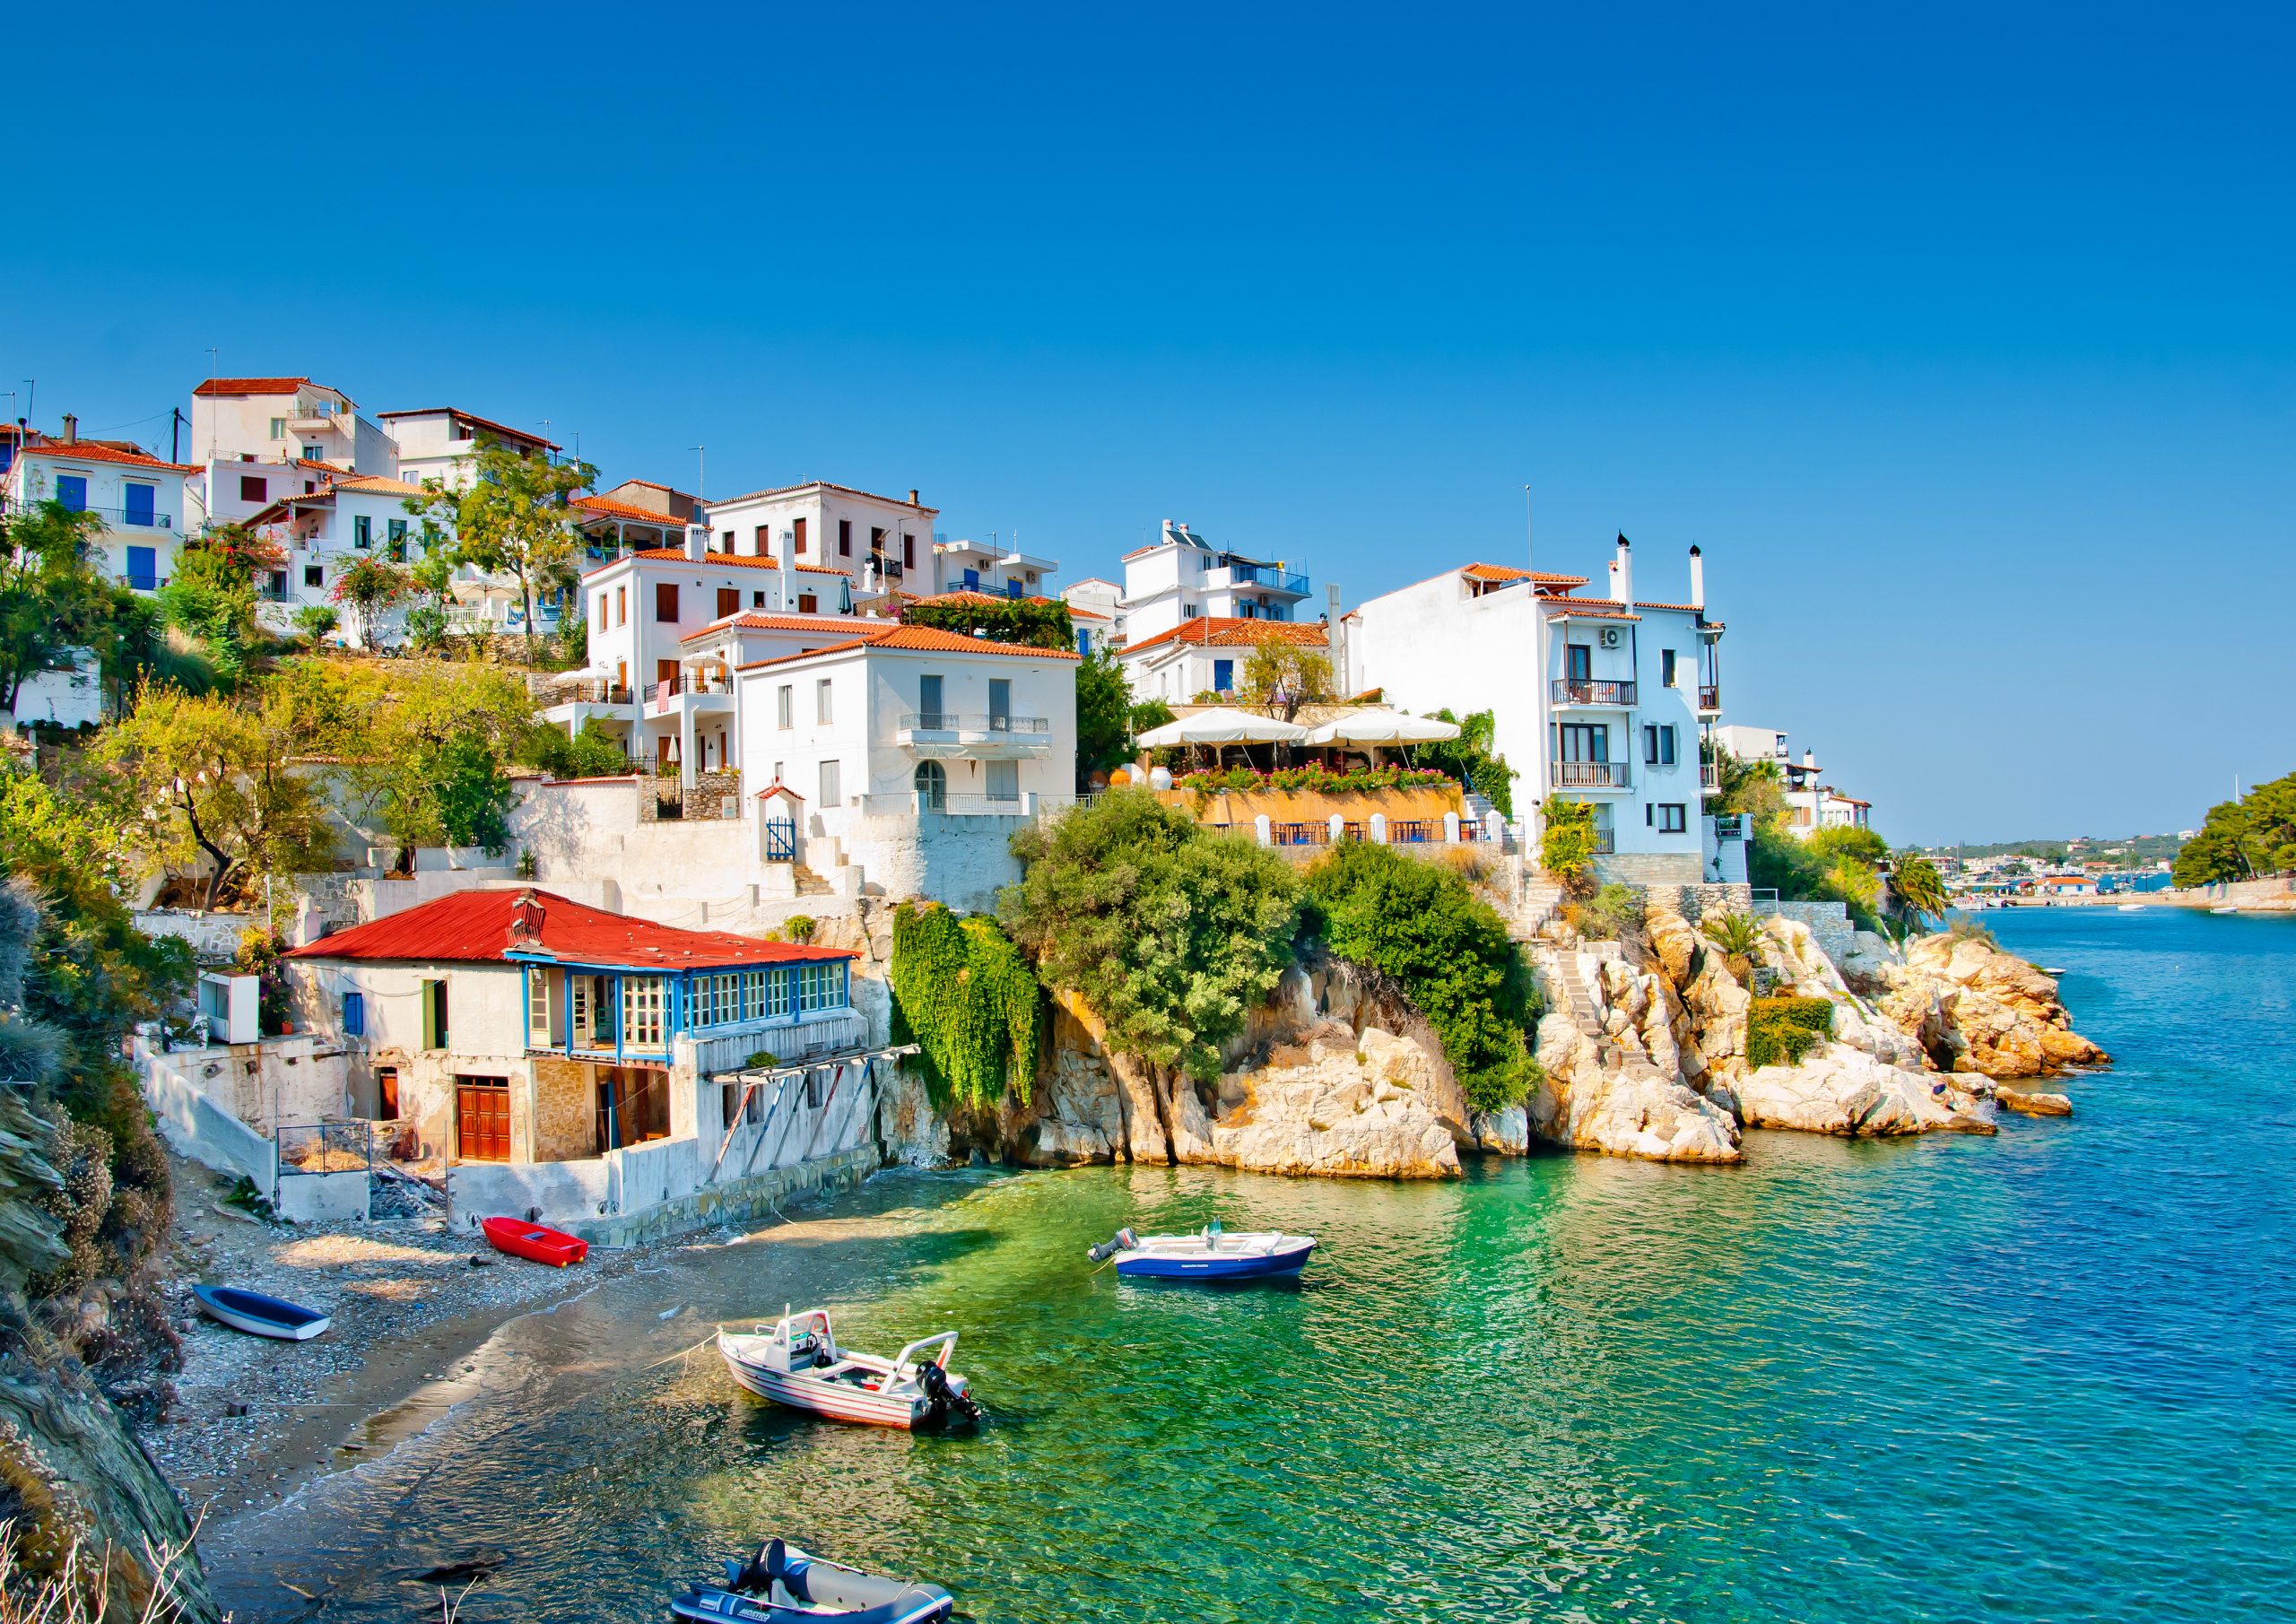 Covid-free Greek isles beckon tourists